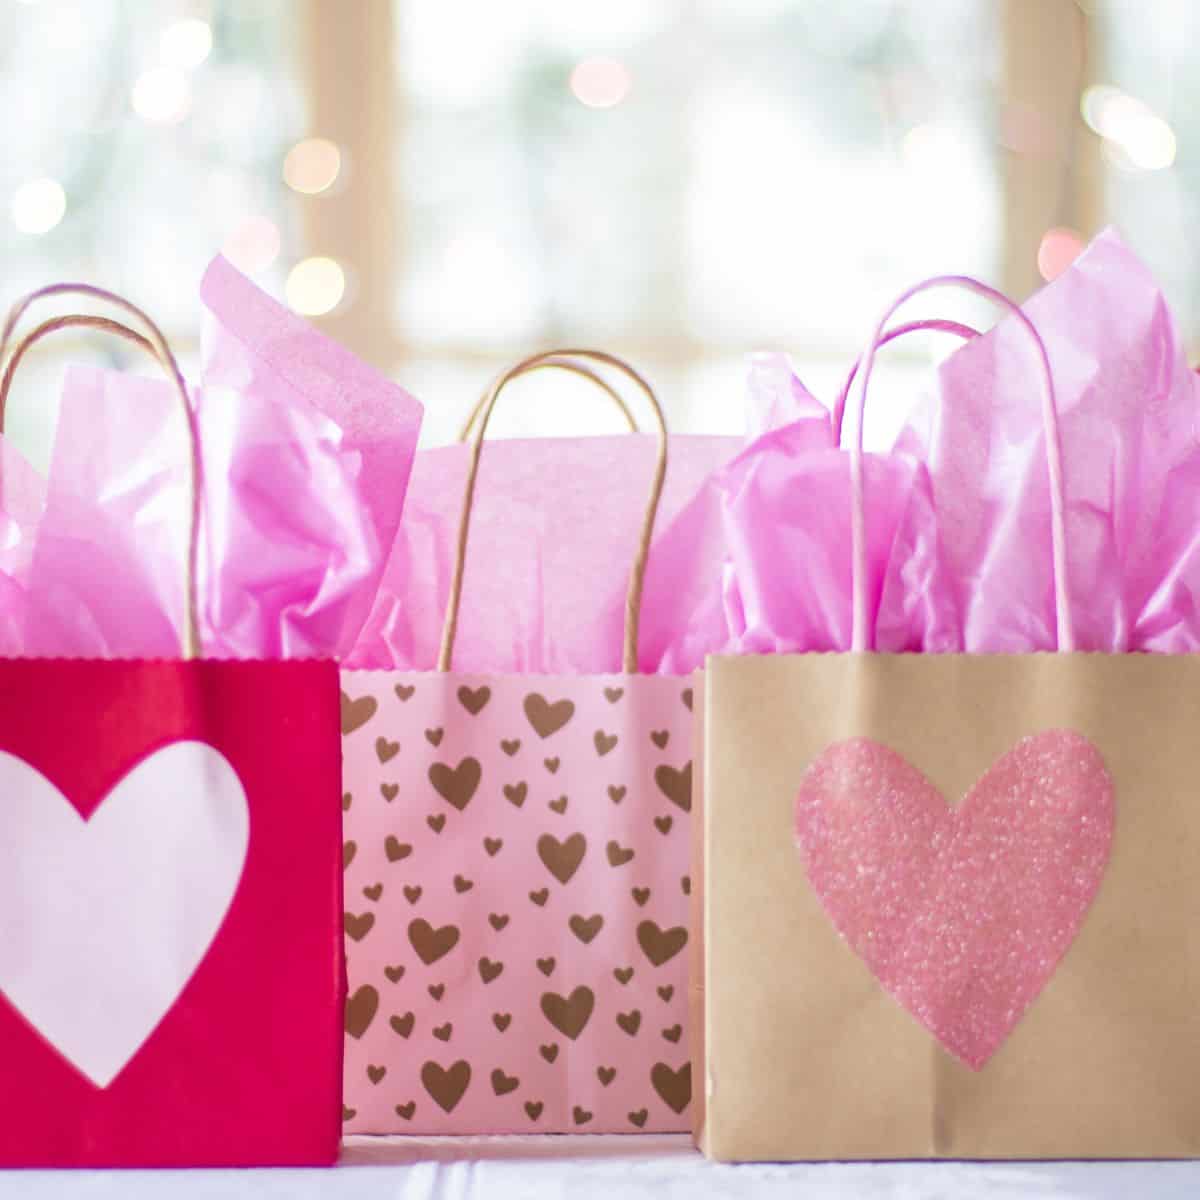 Preschool Goodies bags decoration ideas/Easy Goodies bags ideas